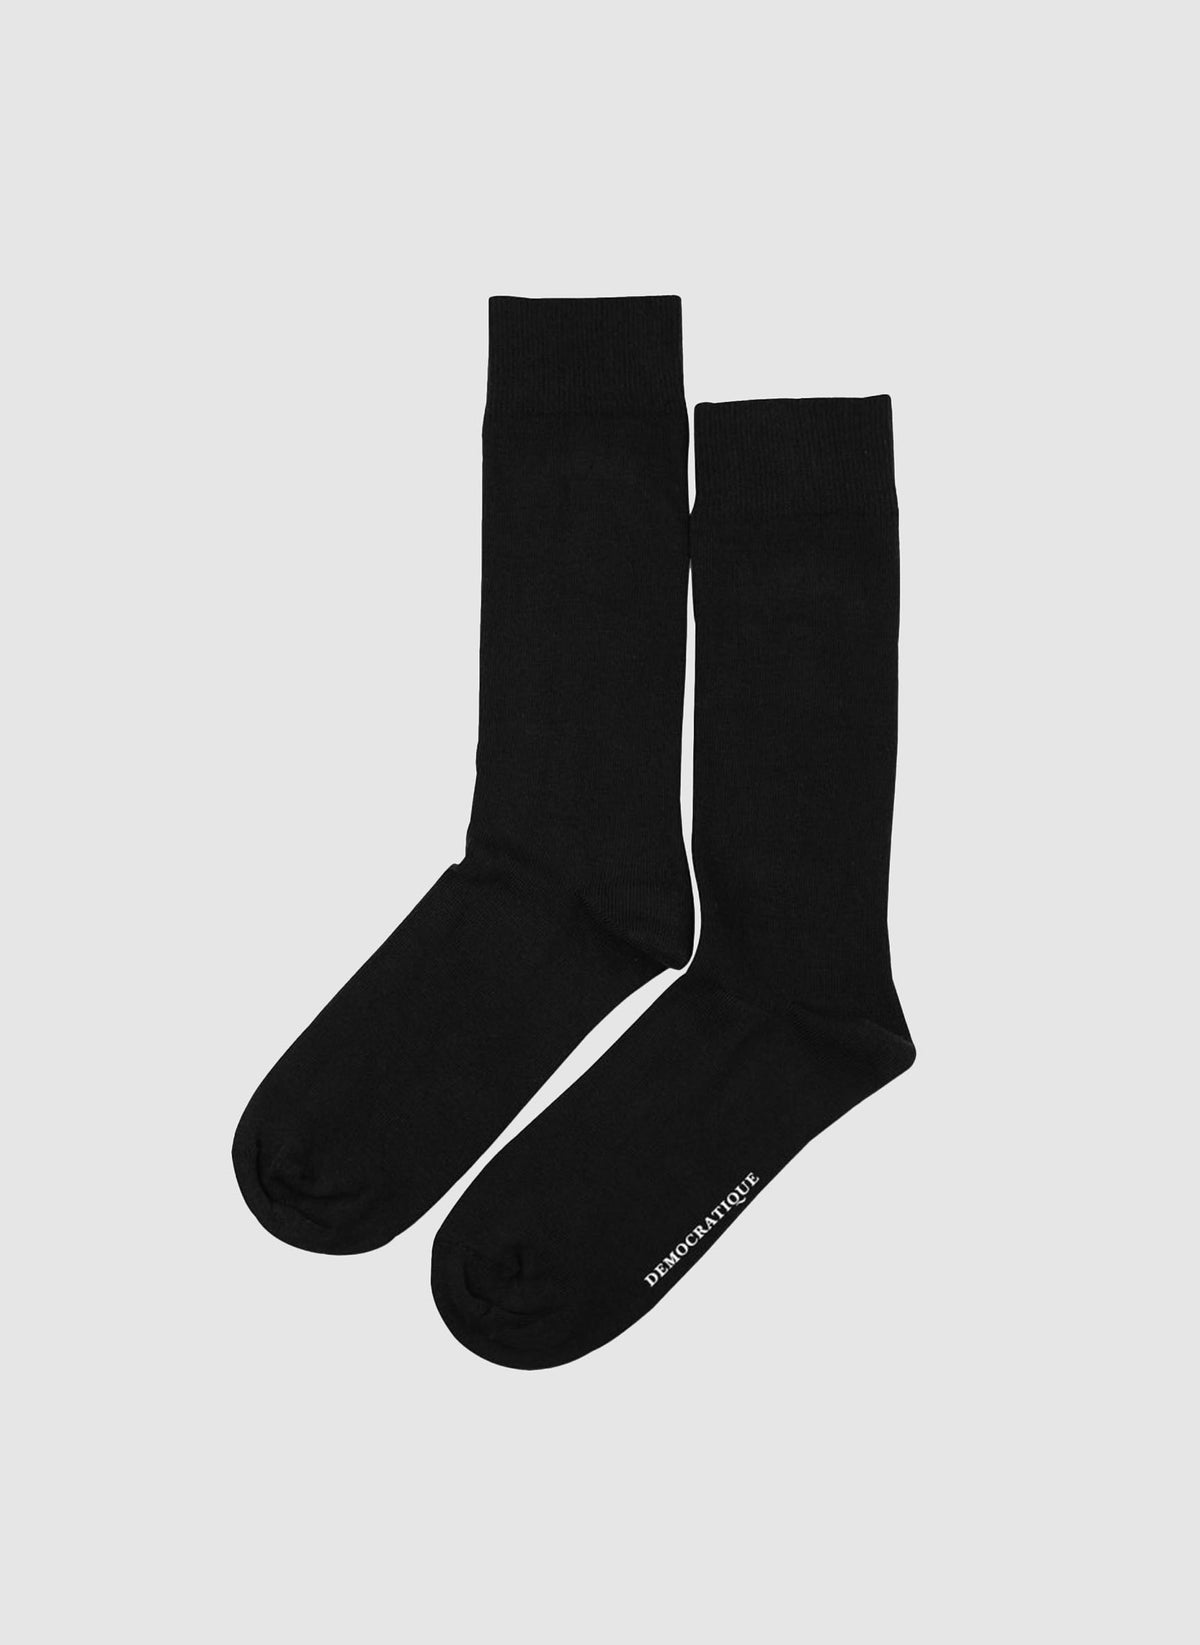 Originals Solid Socks - Black